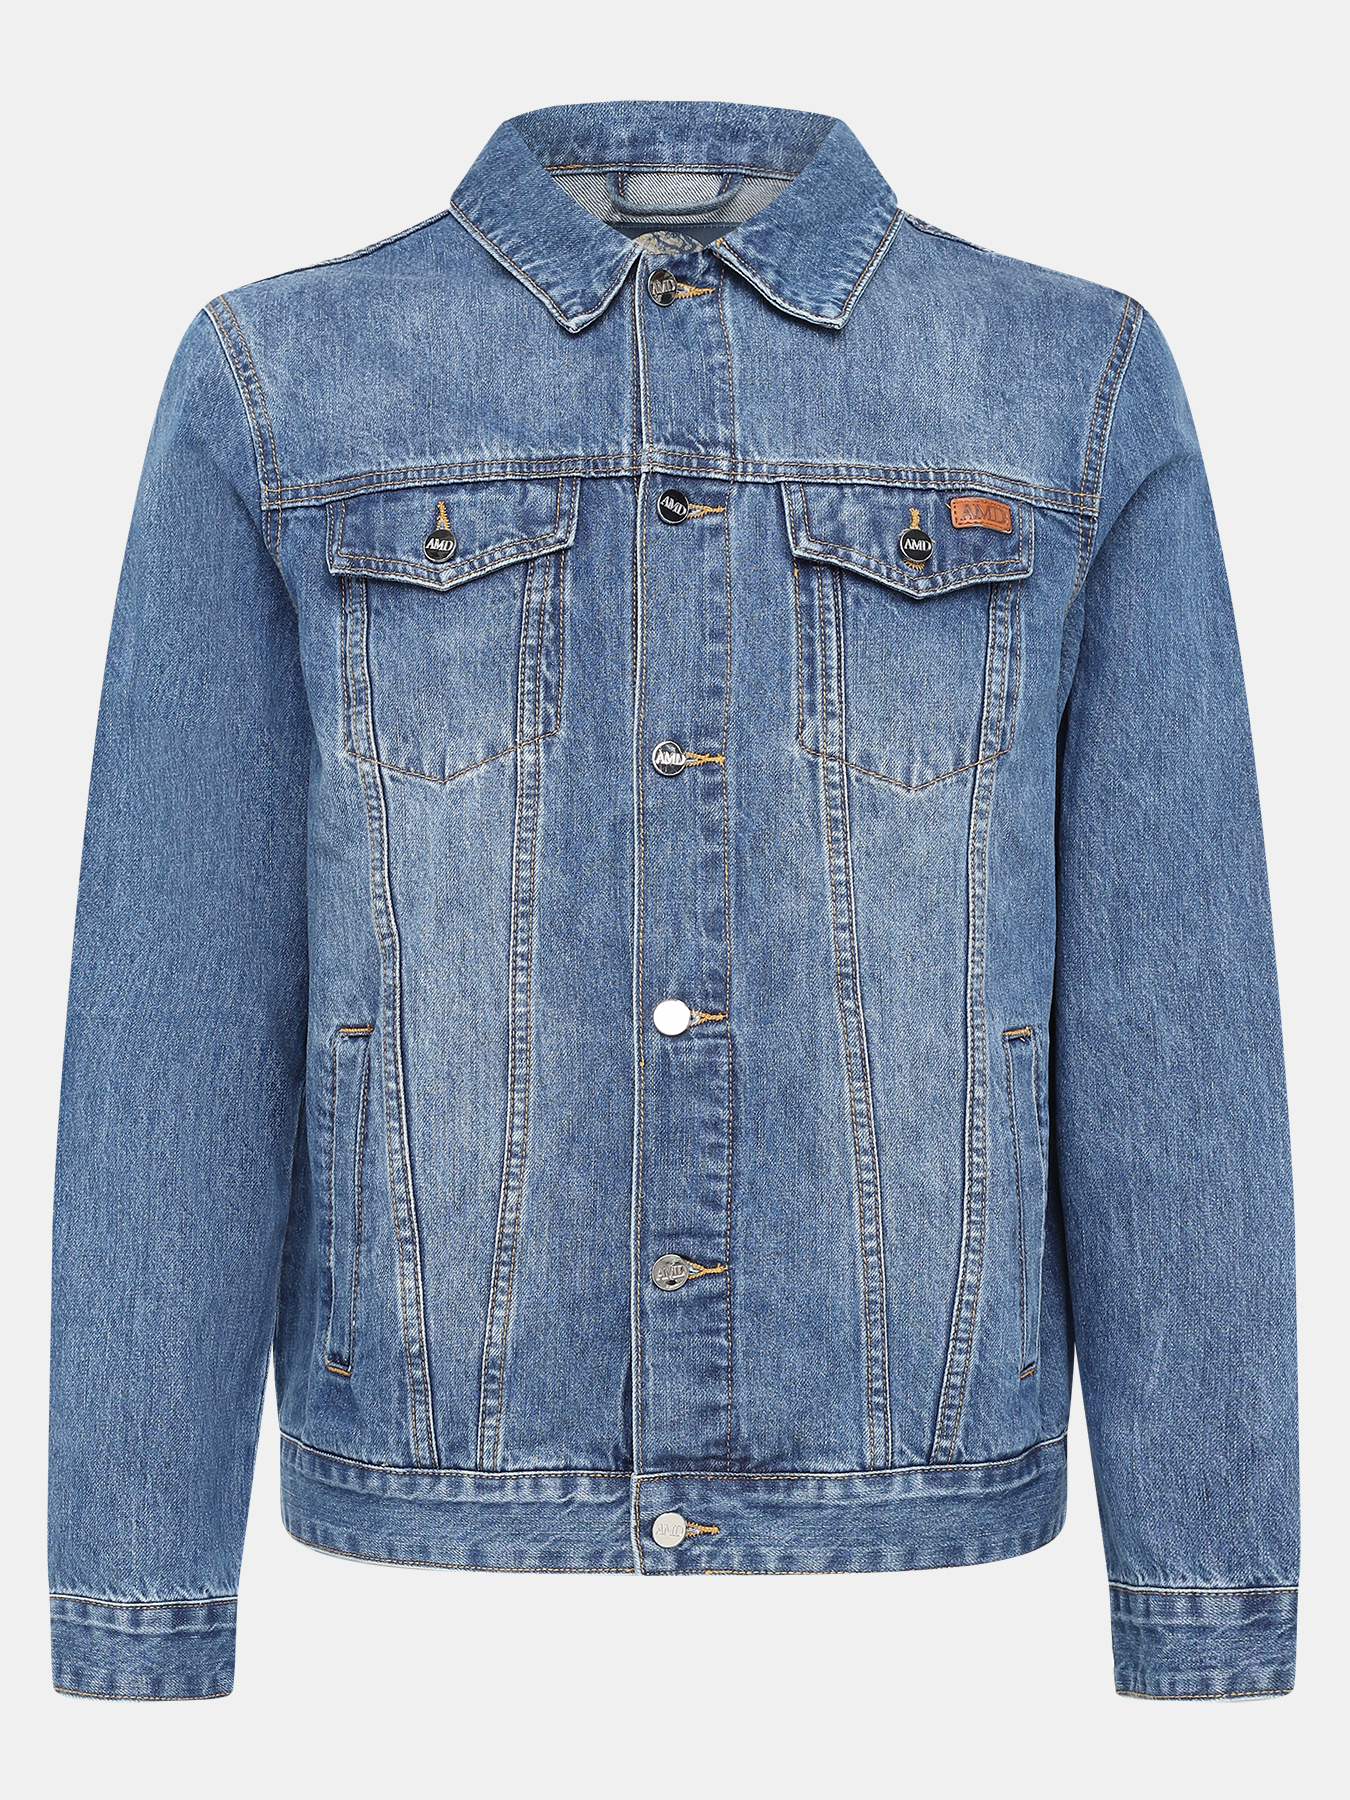 Джинсовая куртка Alessandro Manzoni Denim 401784-026, цвет синий, размер 50